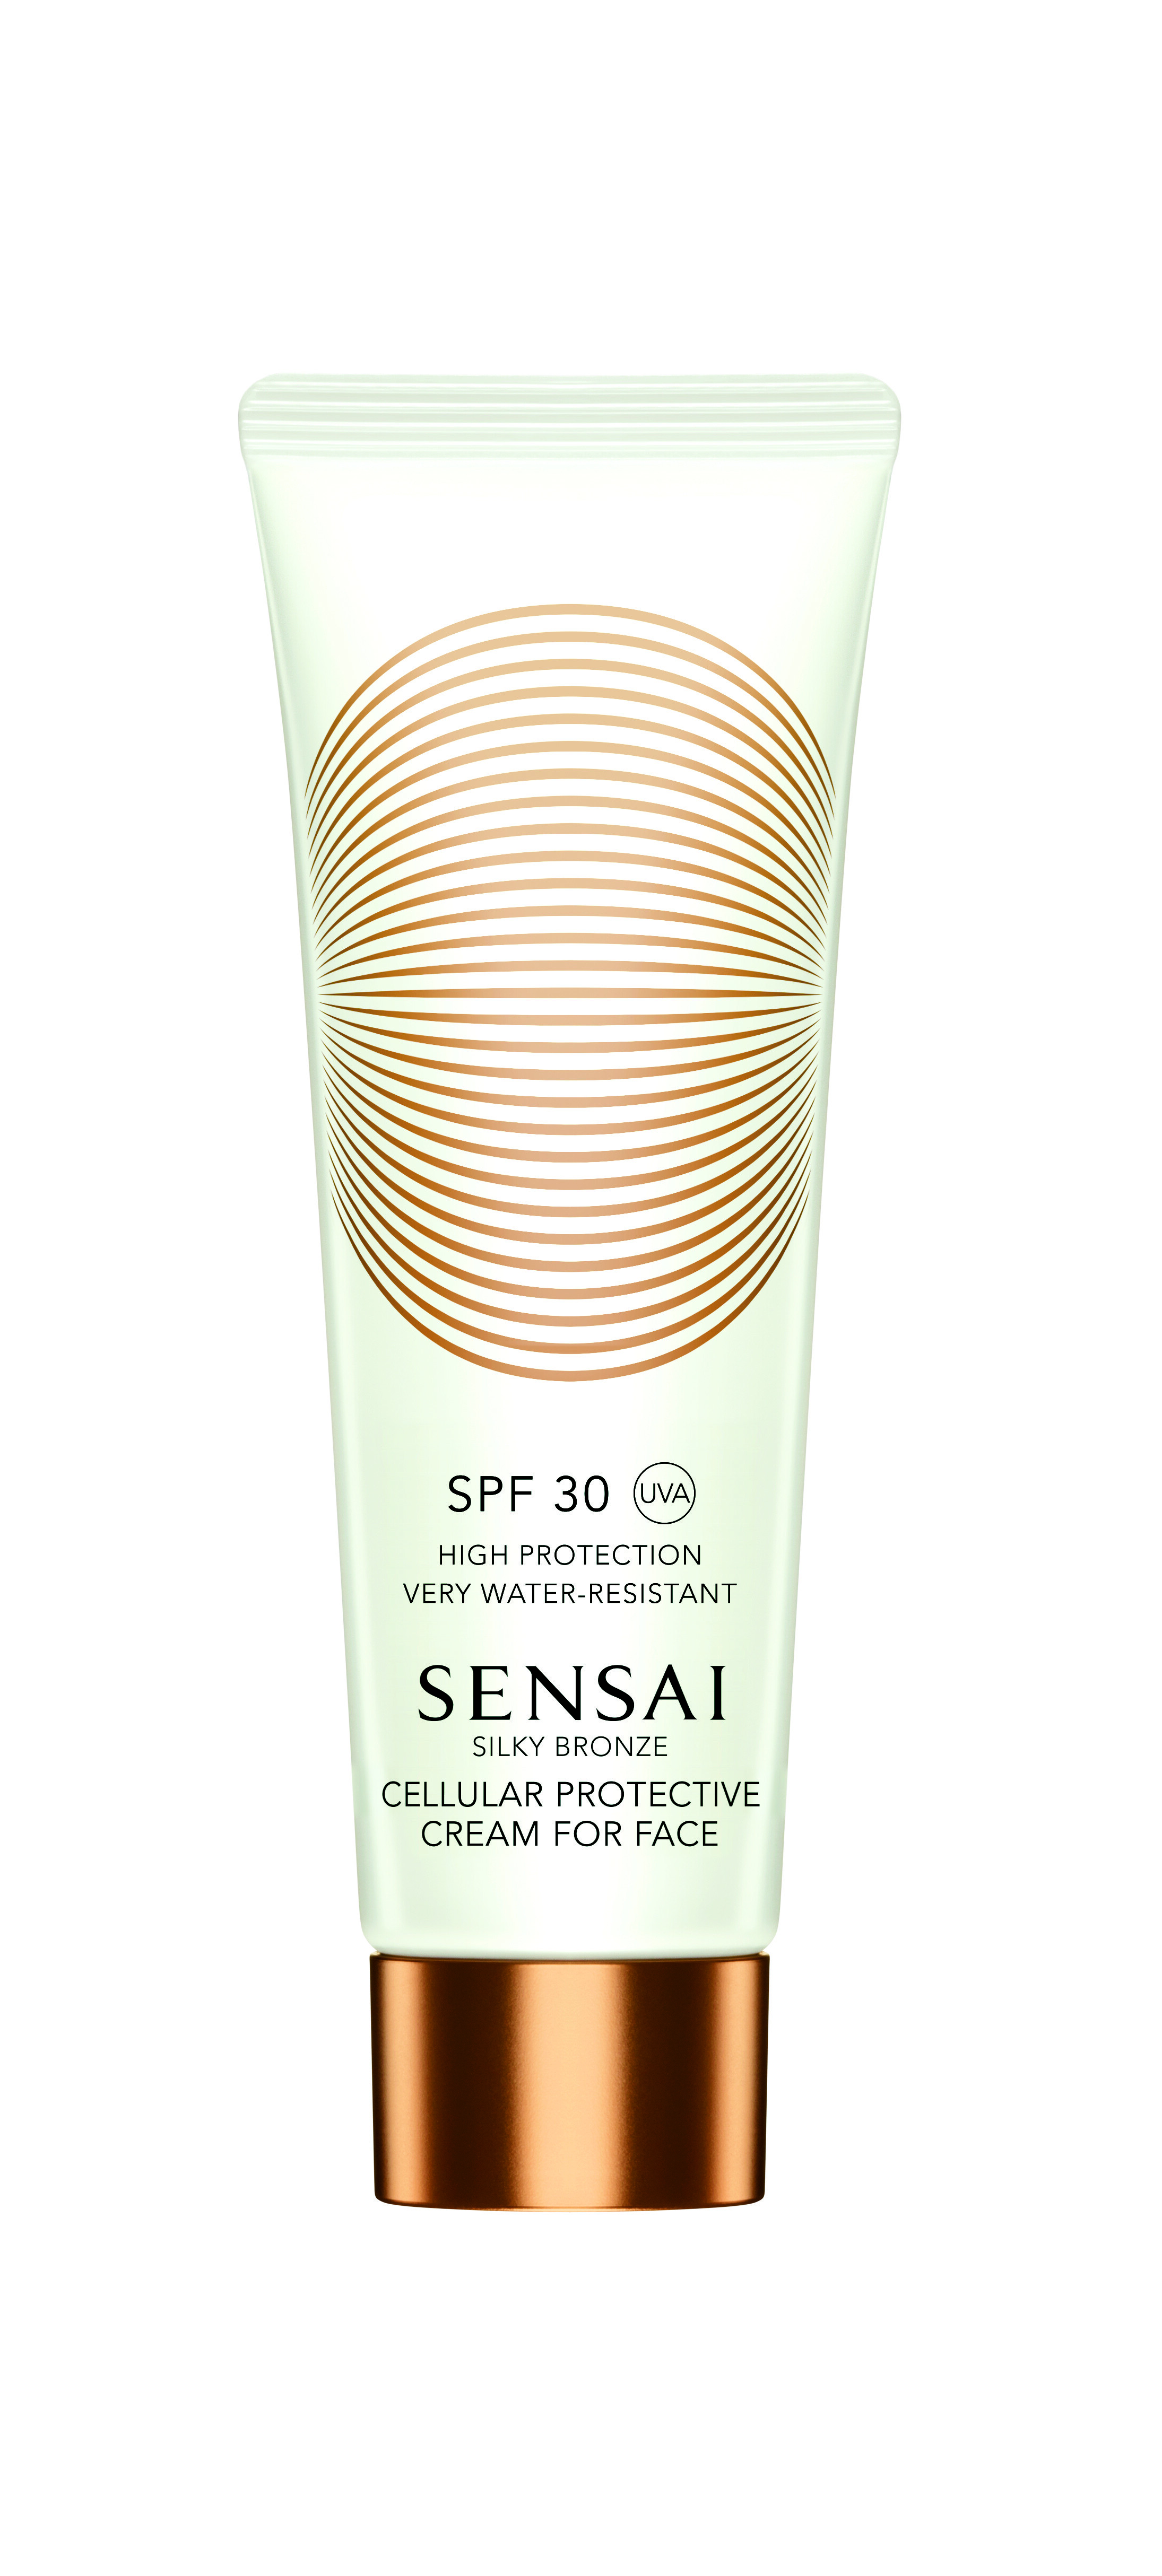 Sonnenschutz Sensai SILKY BRONZE Cellular Protective Cream 50ml kaufen